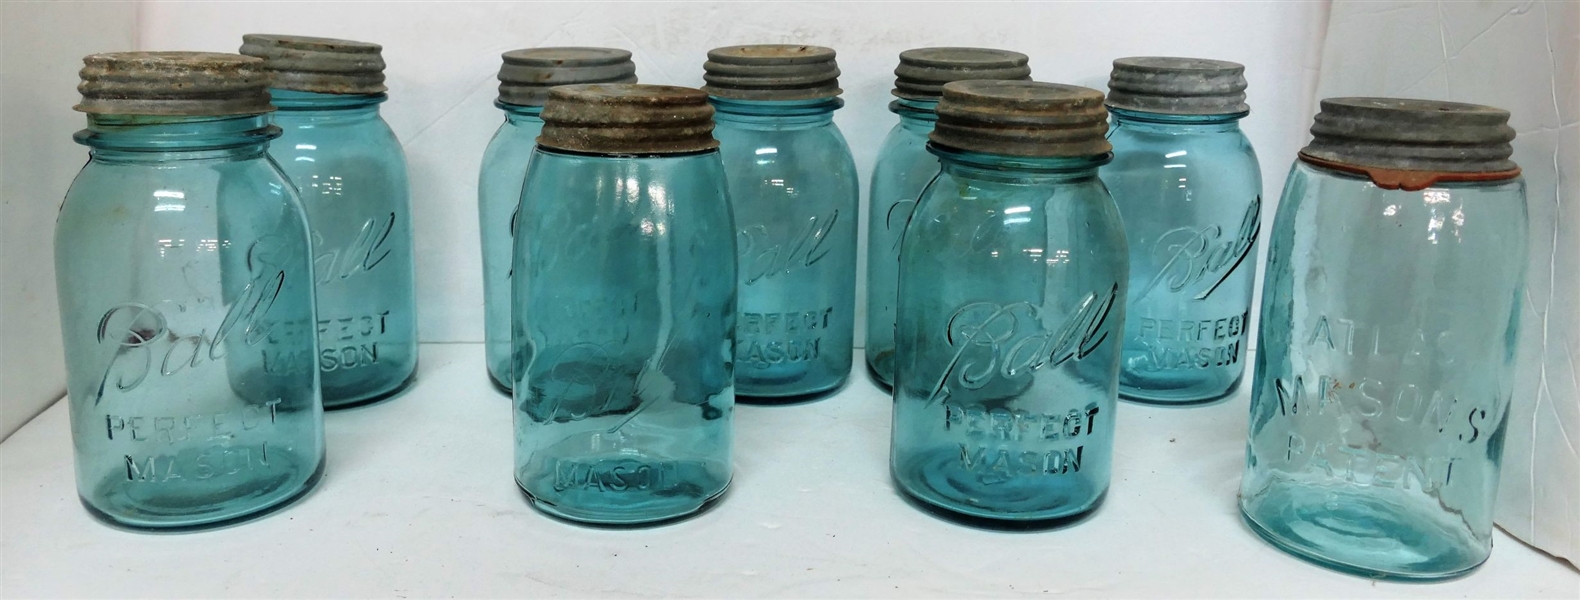 9 Blue Mason Quart Jars with Zinc Lids - - 8 Ball and 1 Atlas